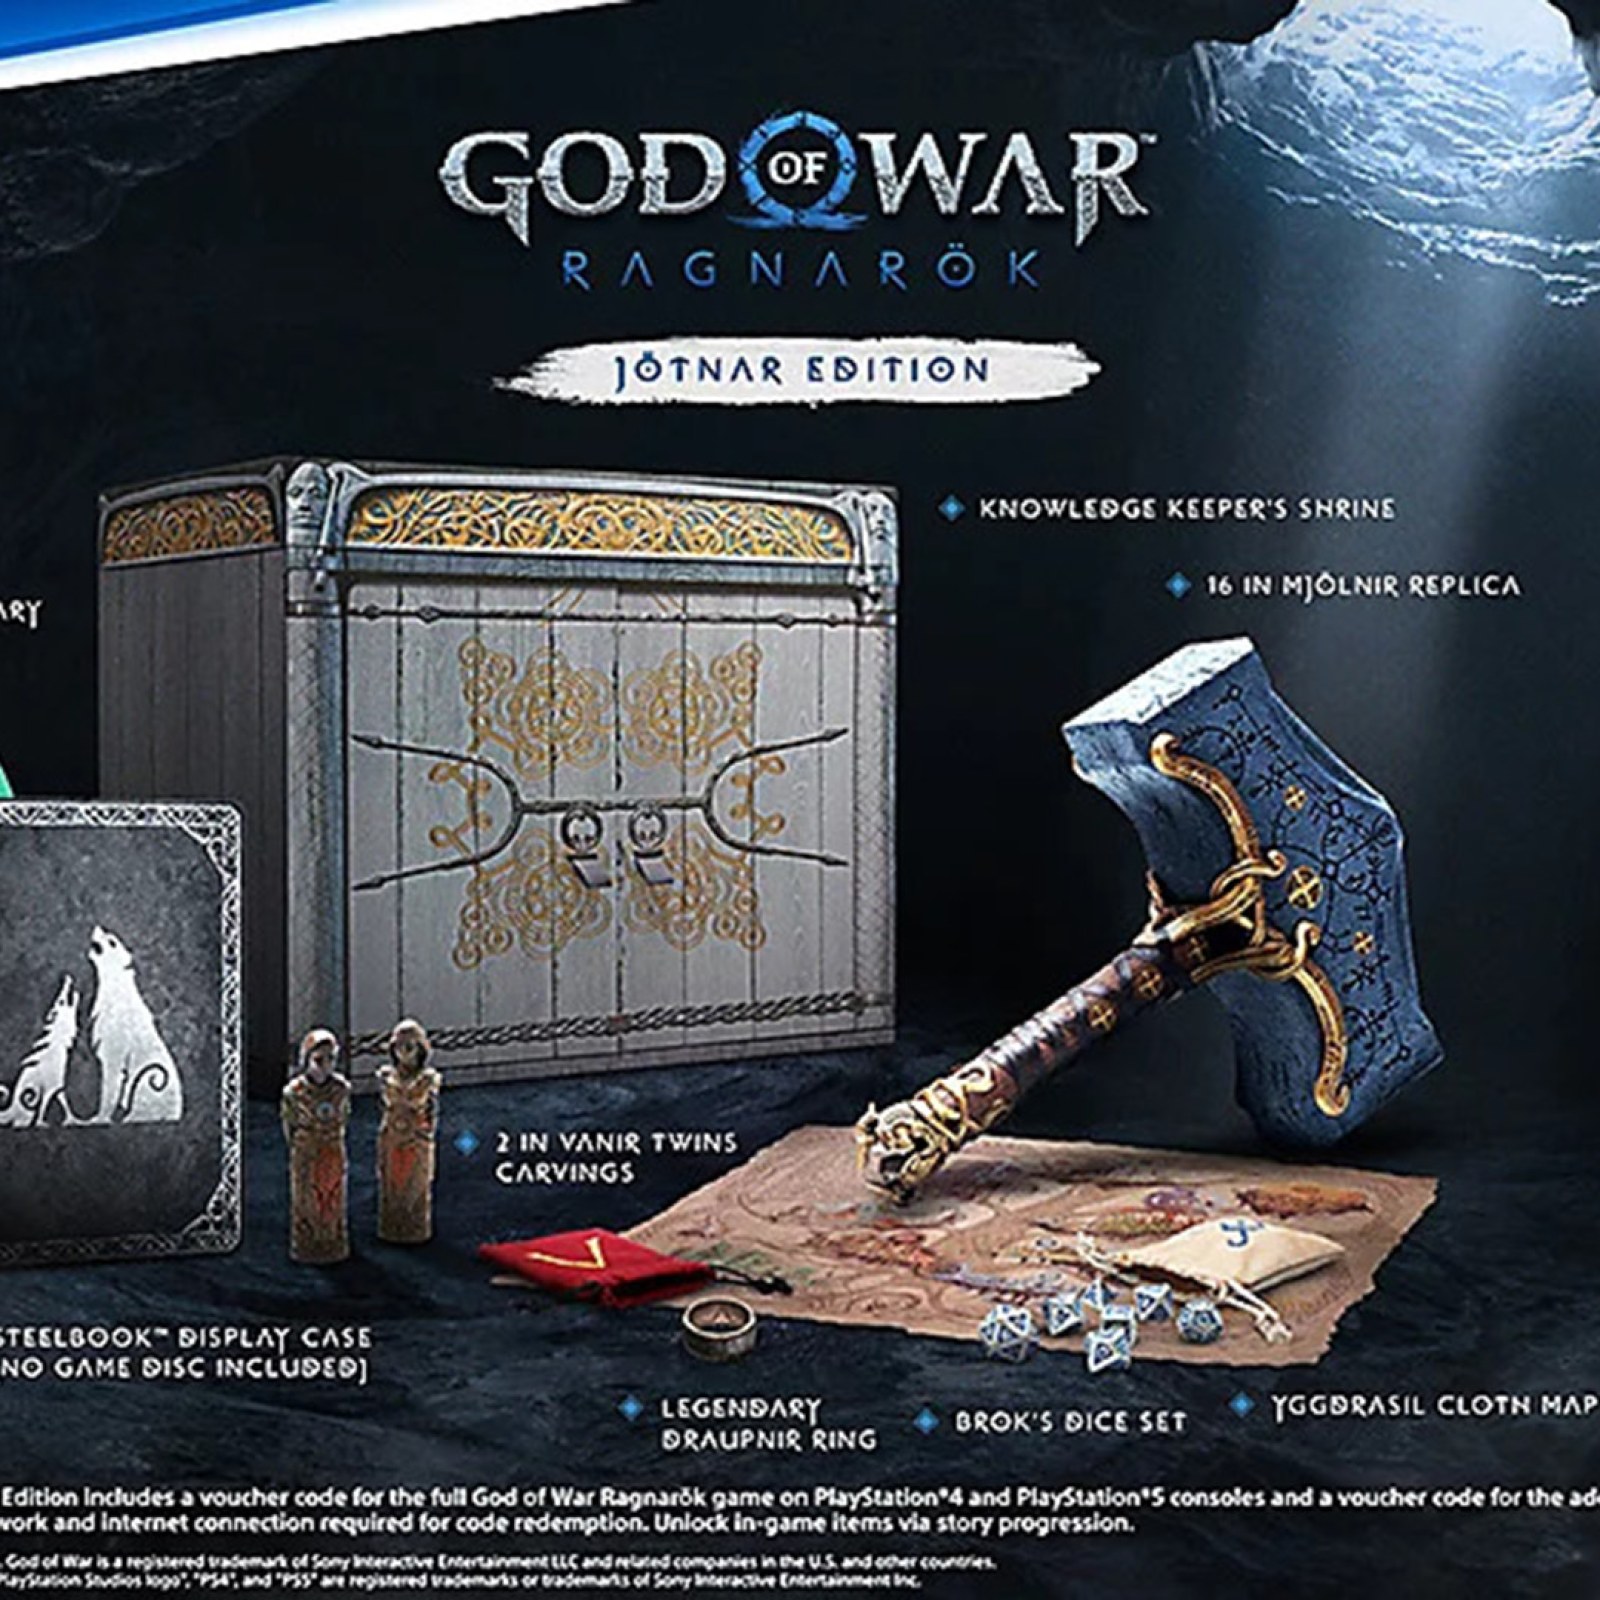 God of War Ragnarok Deluxe Edition Ps4 & Ps5 - HF Games